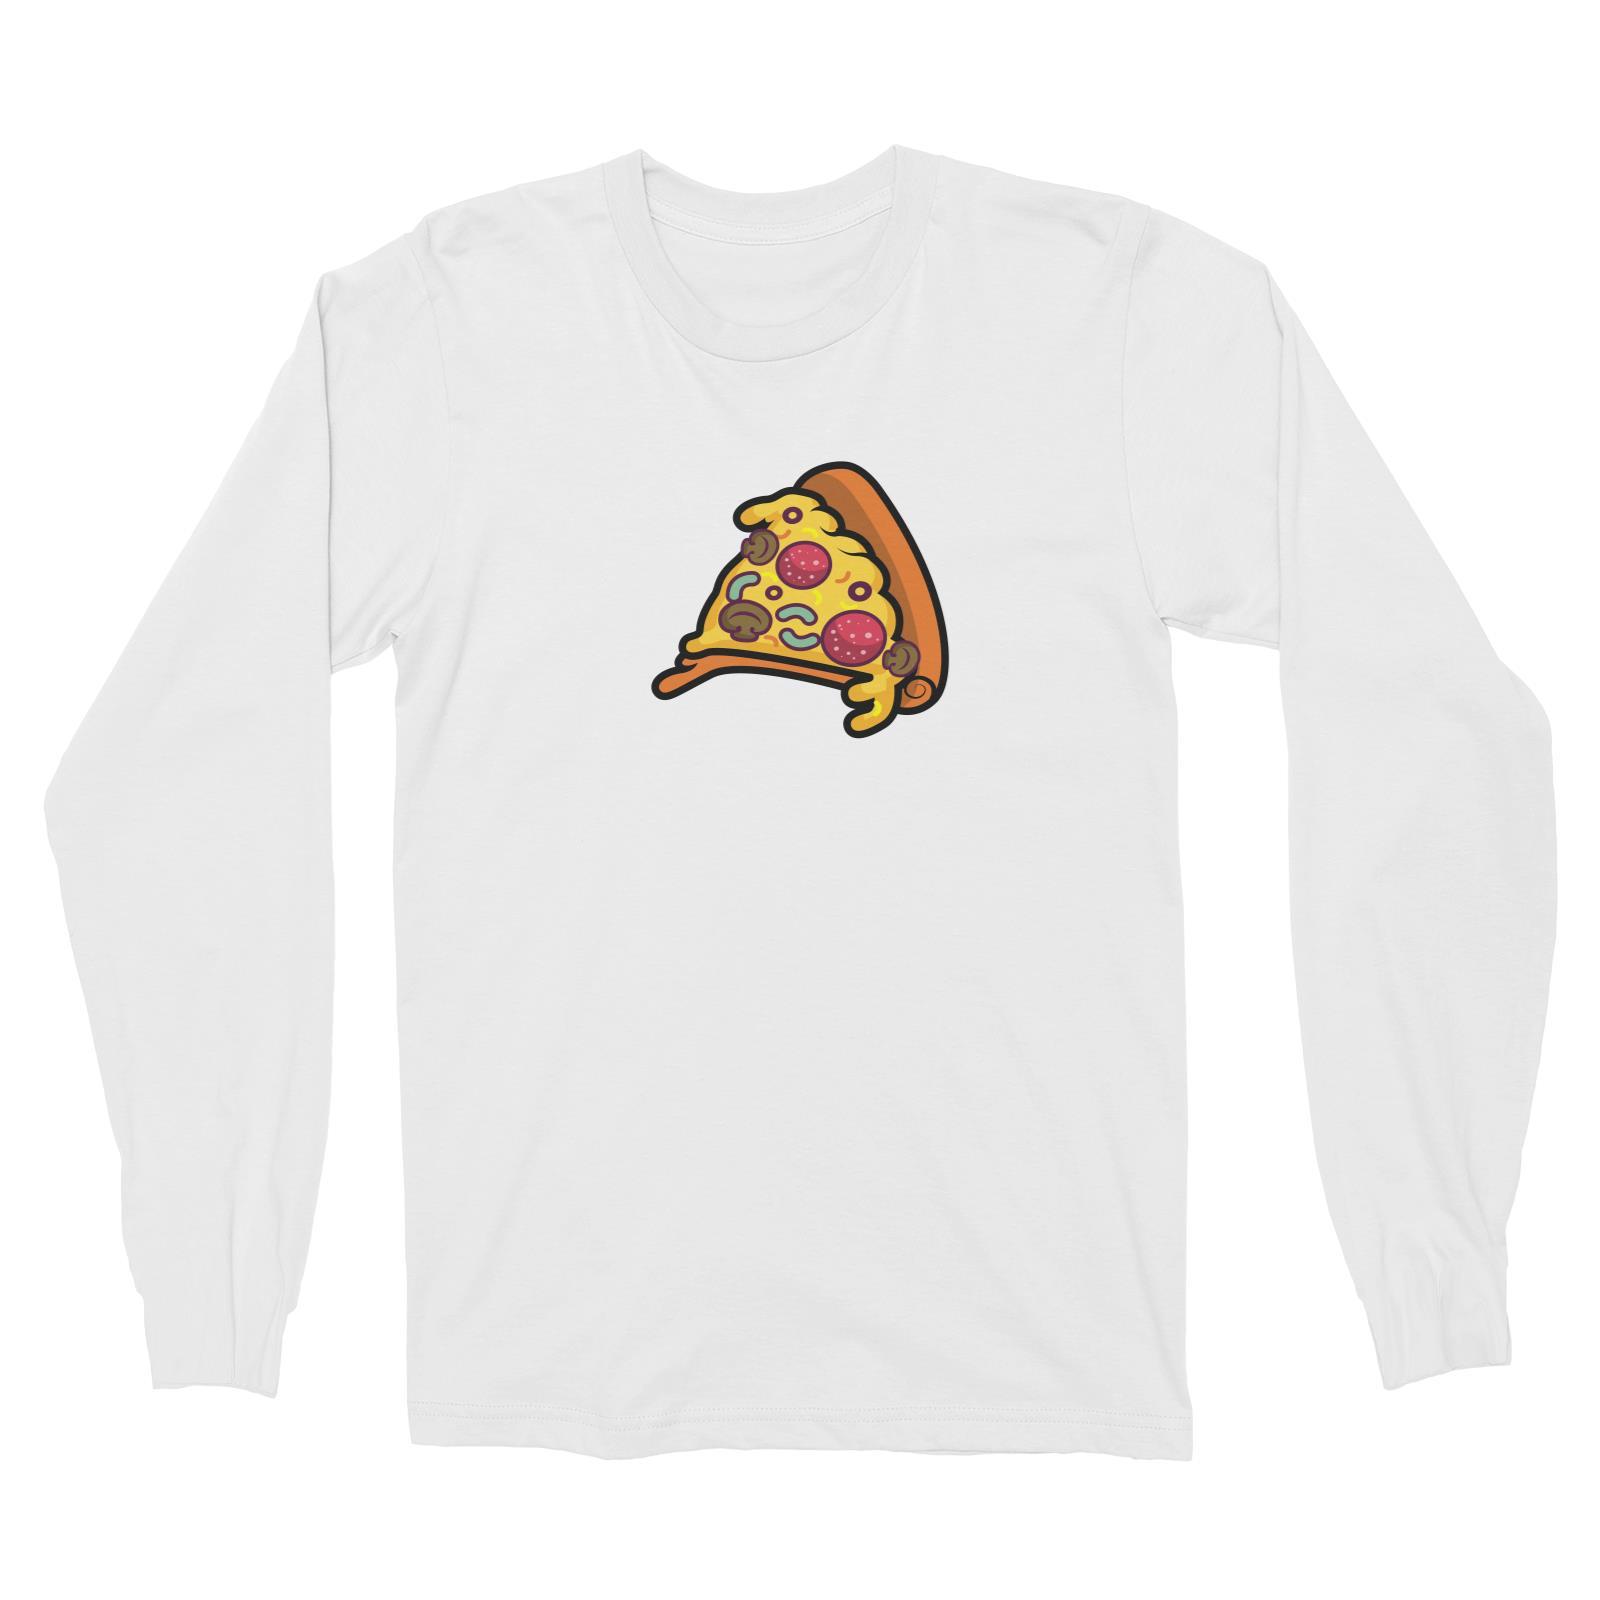 Fast Food Pizza Slice Long Sleeve Unisex T-Shirt  Matching Family Comic Cartoon